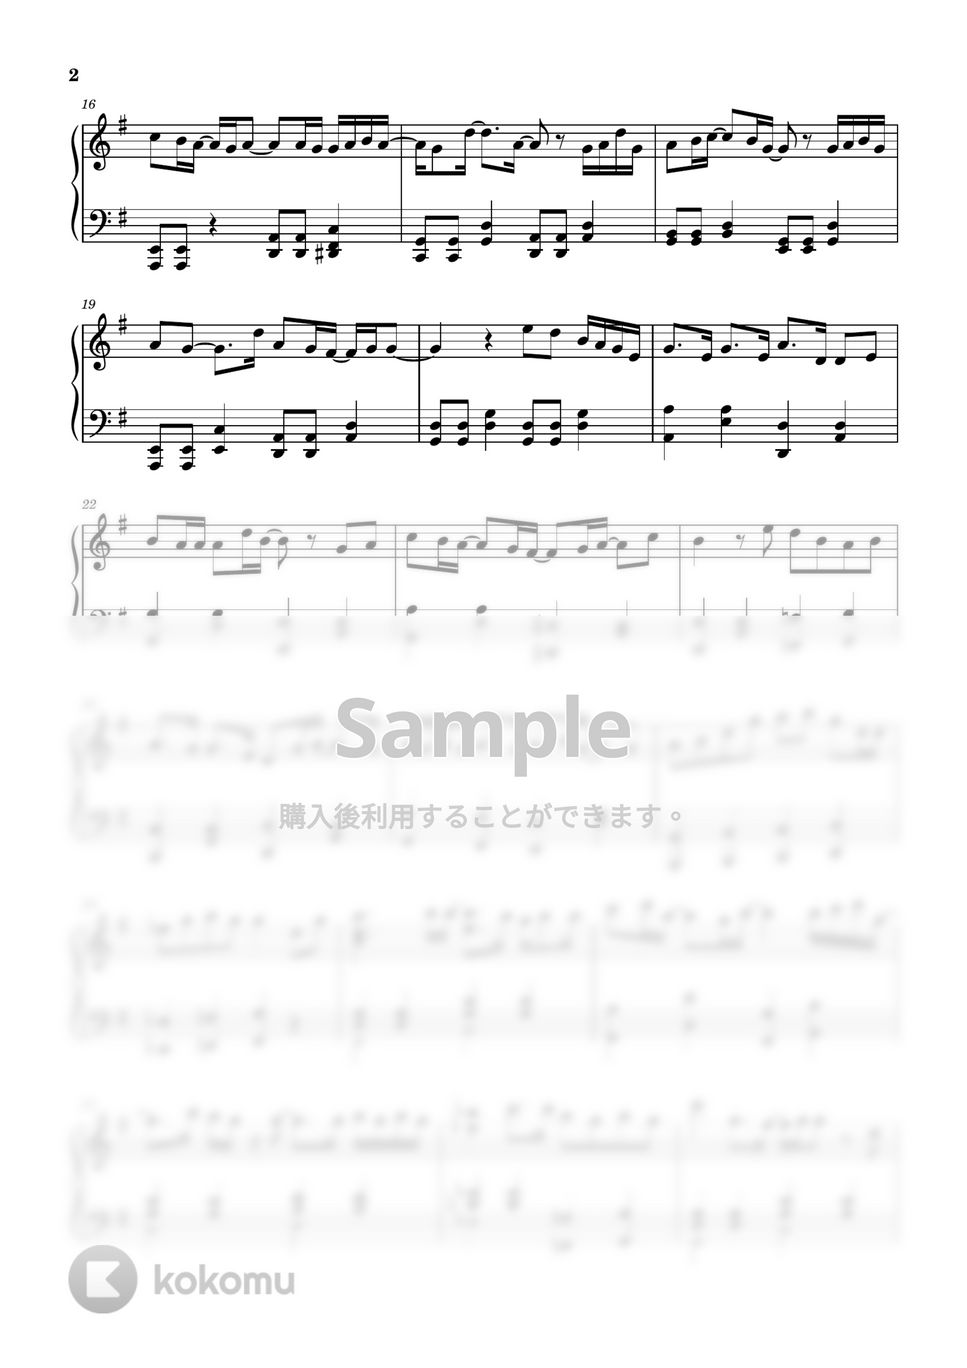 Saucy dog - 魔法にかけられて (ピアノ上級ソロ) by pianon